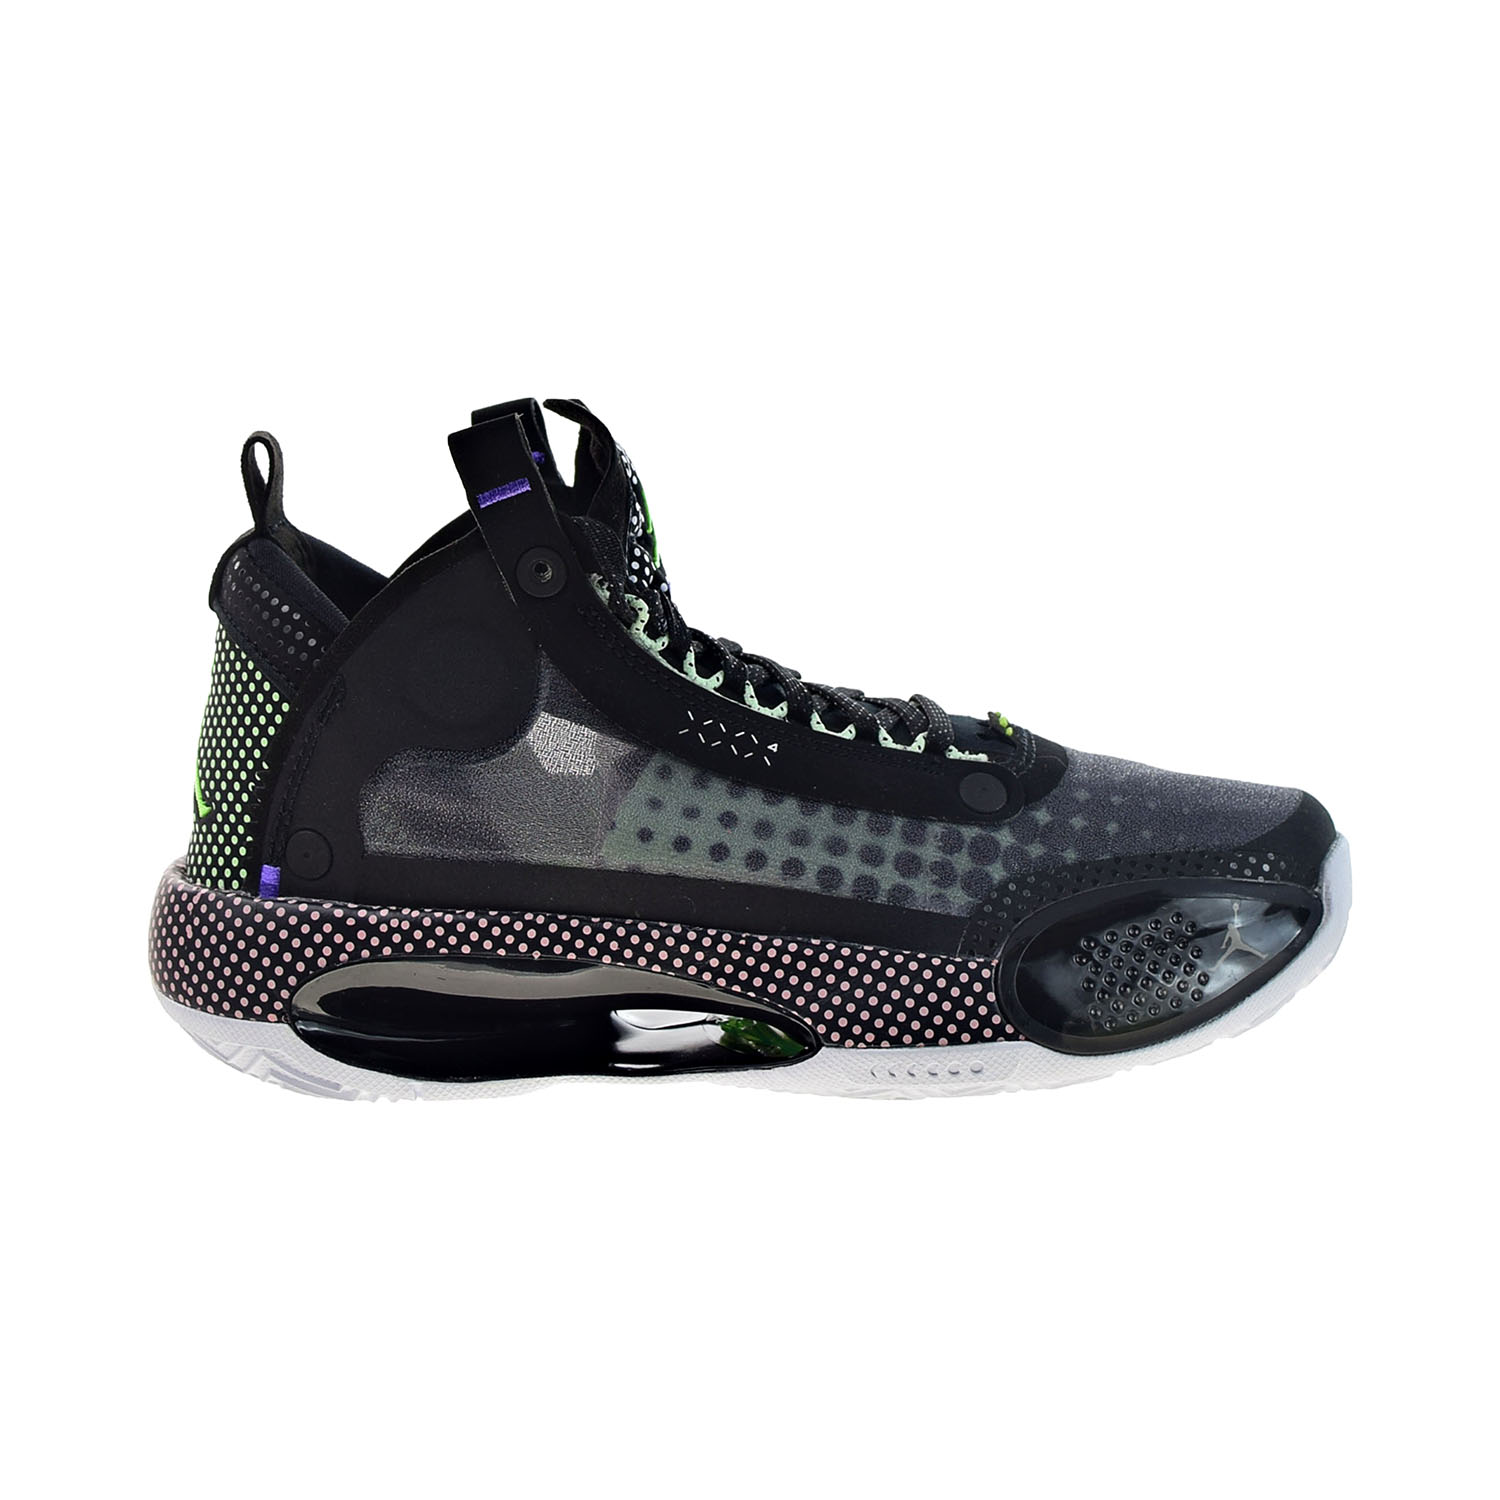 Air Jordan XXXIV 34 Big Kids' Basketball Shoes Black-White-V Green bq3384-013 - image 1 of 6